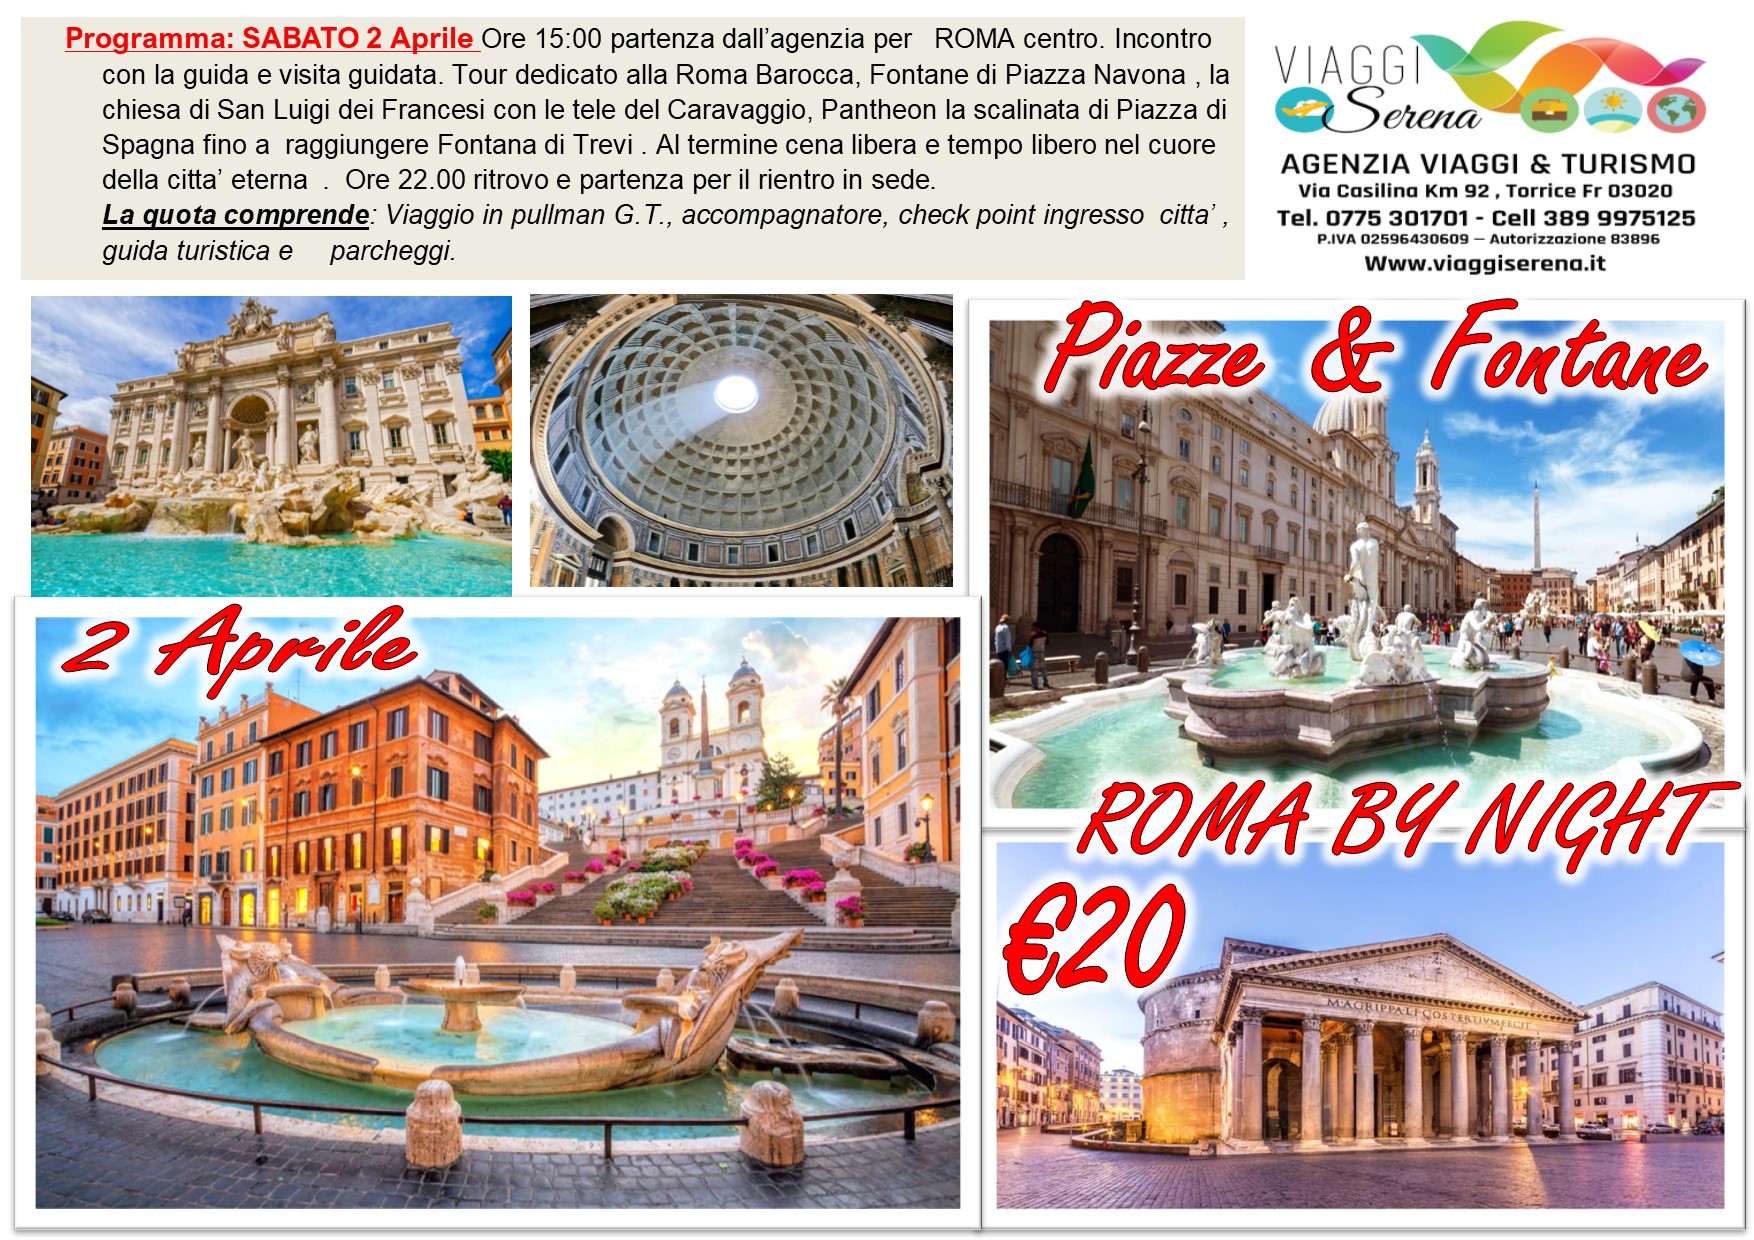 Viaggi di Gruppo: Roma by night “Piazze & Fontane” 2 Aprile € 20,00